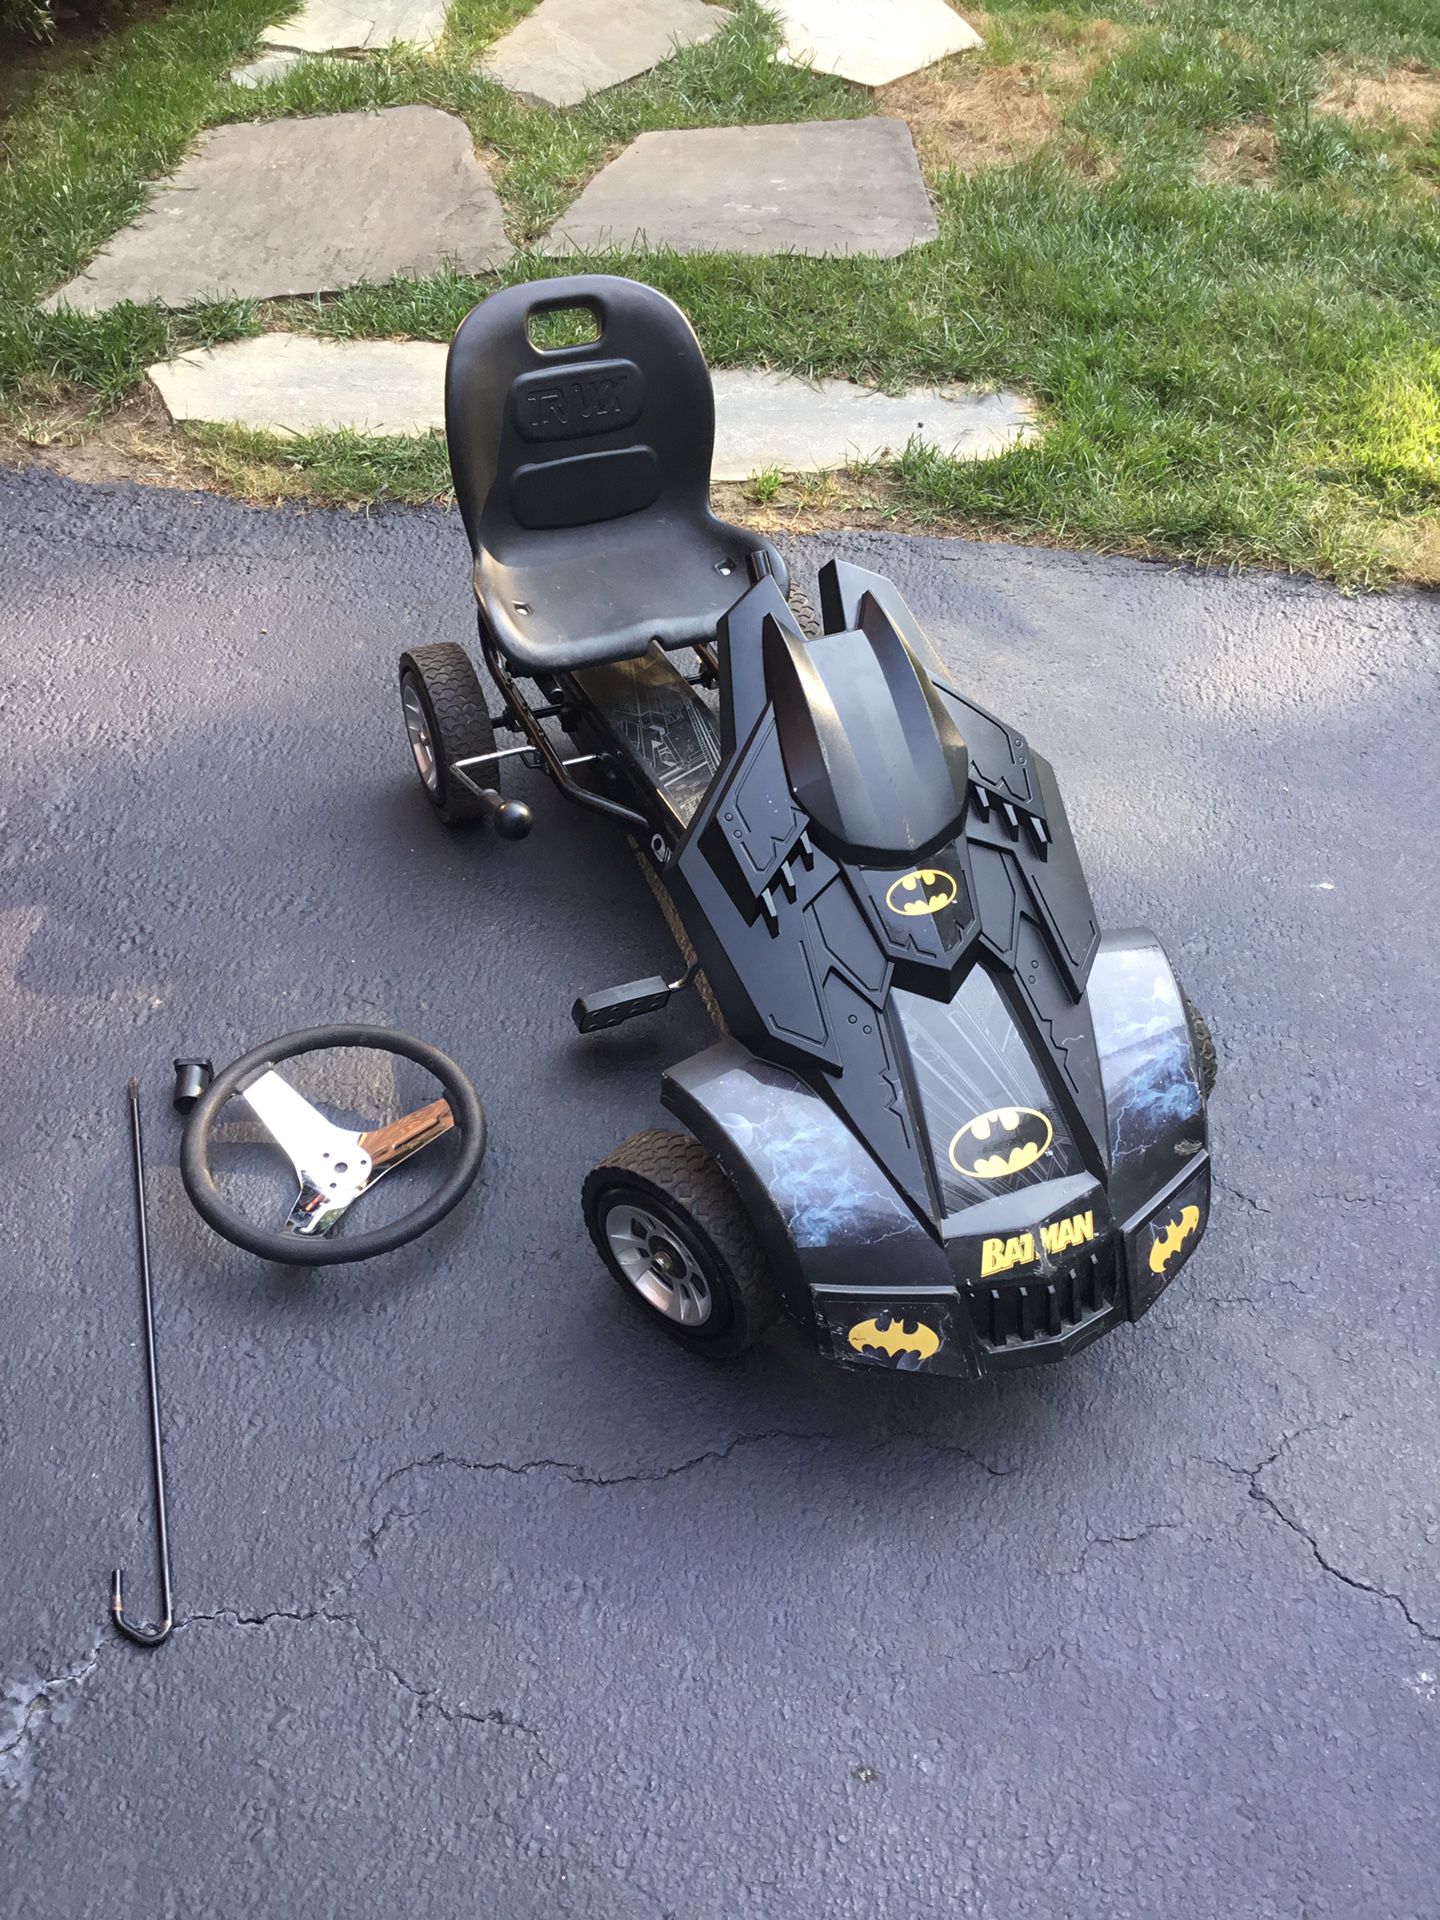 Batman peddle cart - needs new steering column and wheel - MAKE OFFER